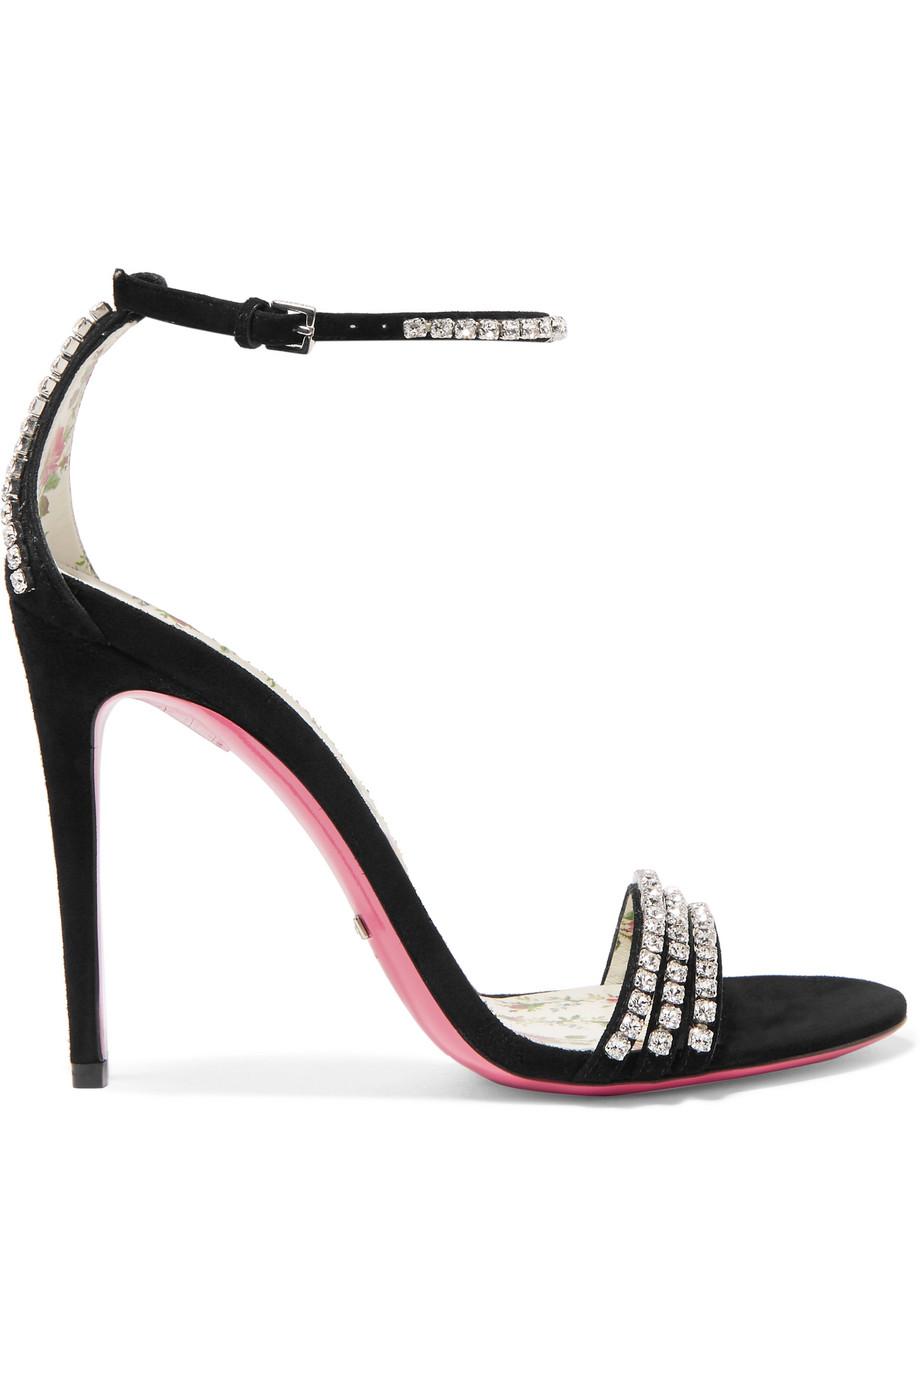 black heels with embellishment